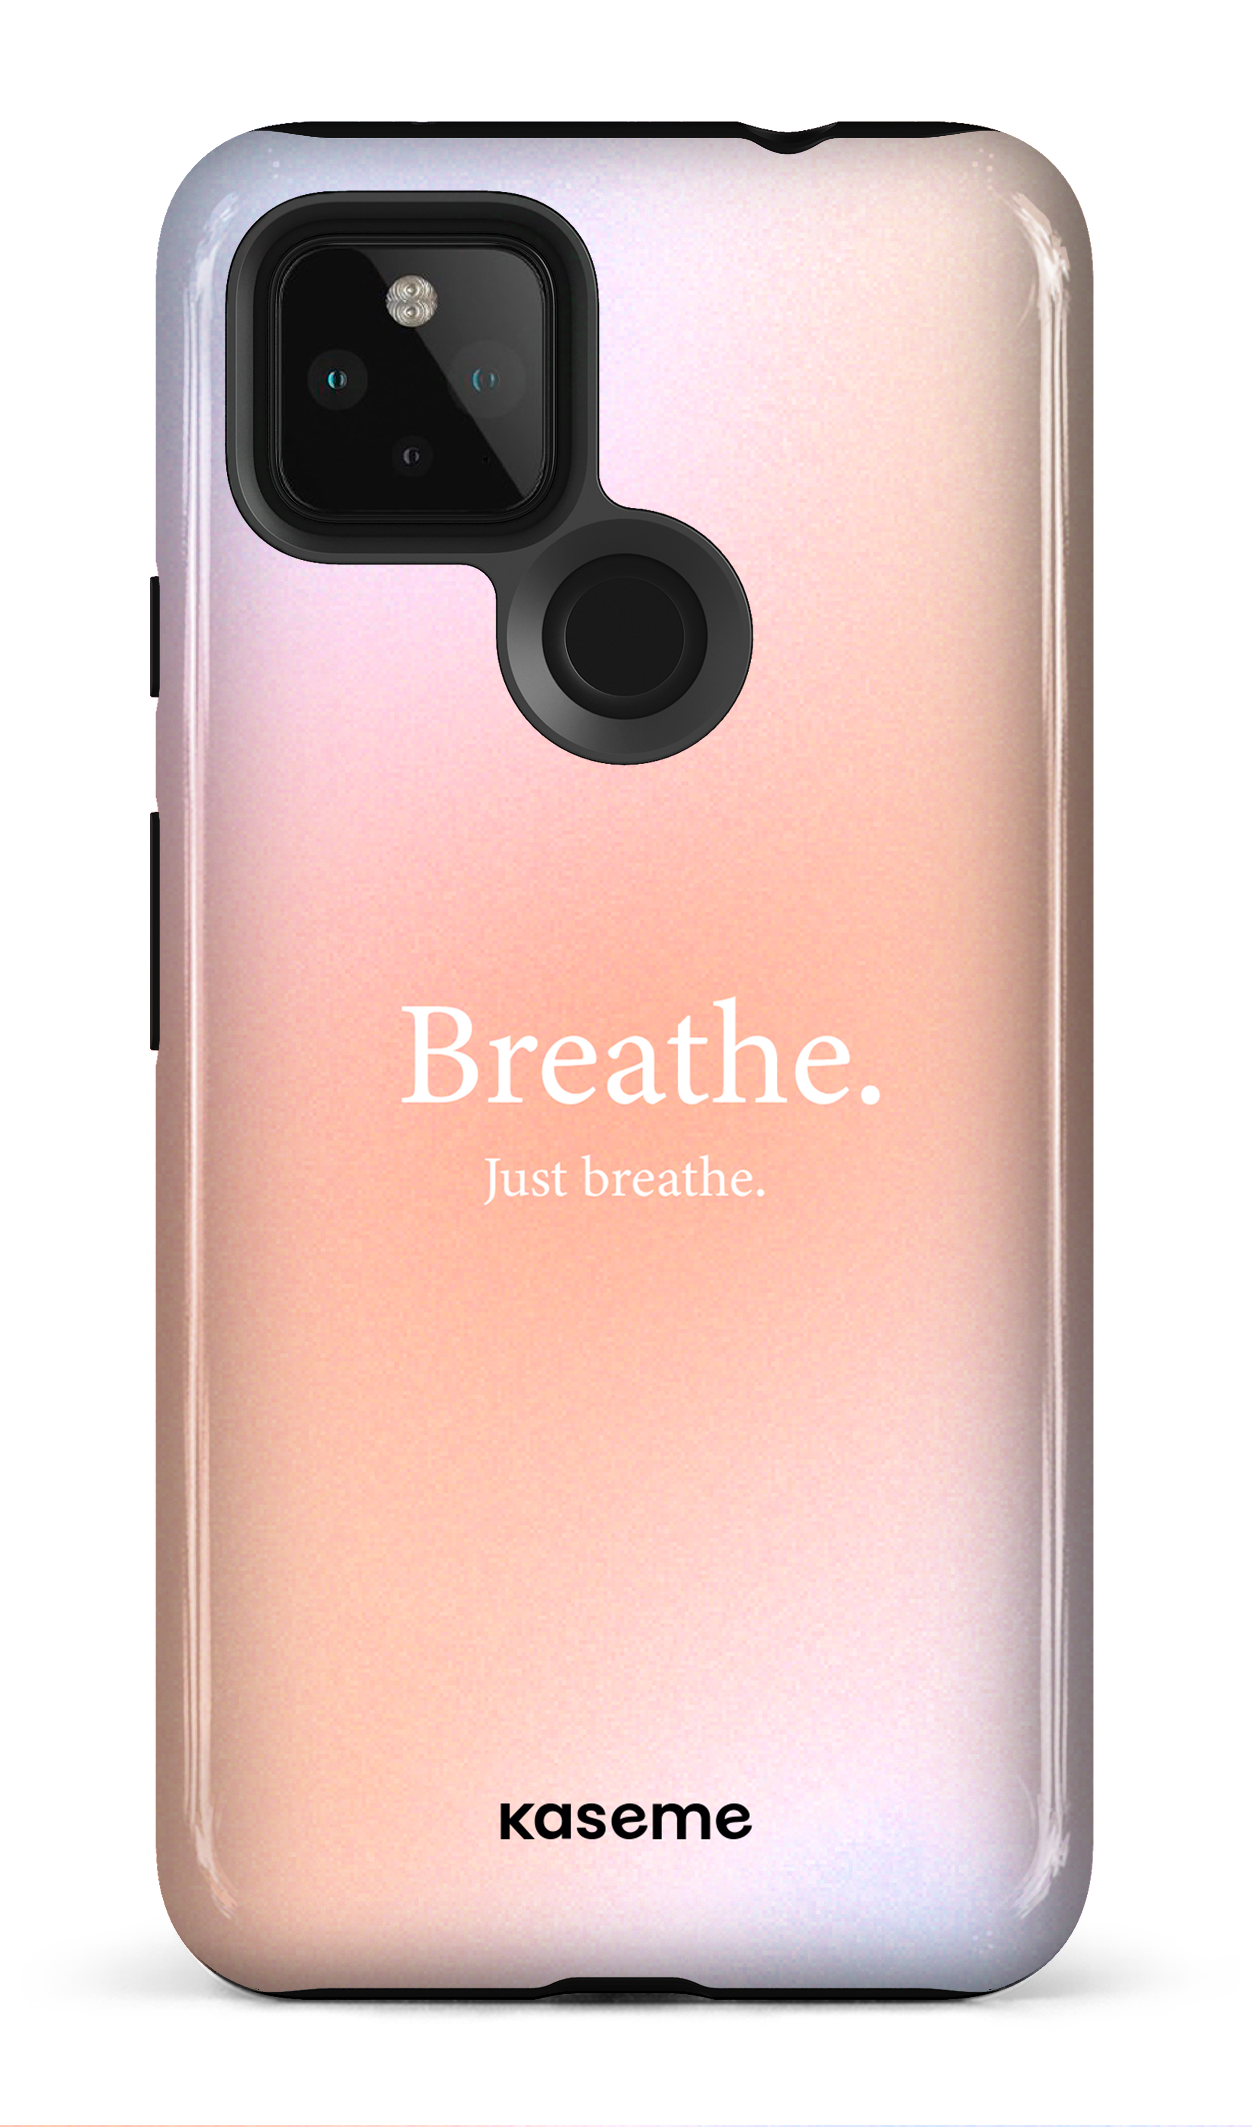 Just breathe - Google Pixel 4A (5G)